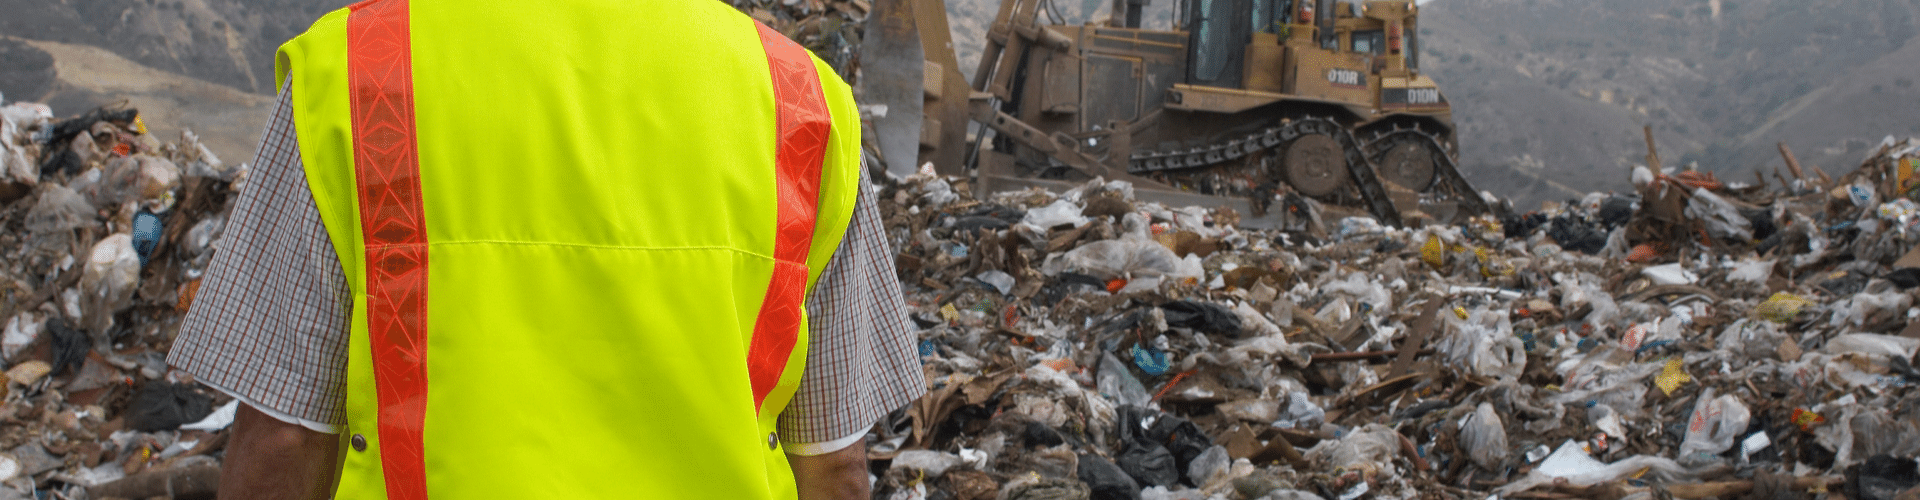 man in hi-vis jacket at a landfill site